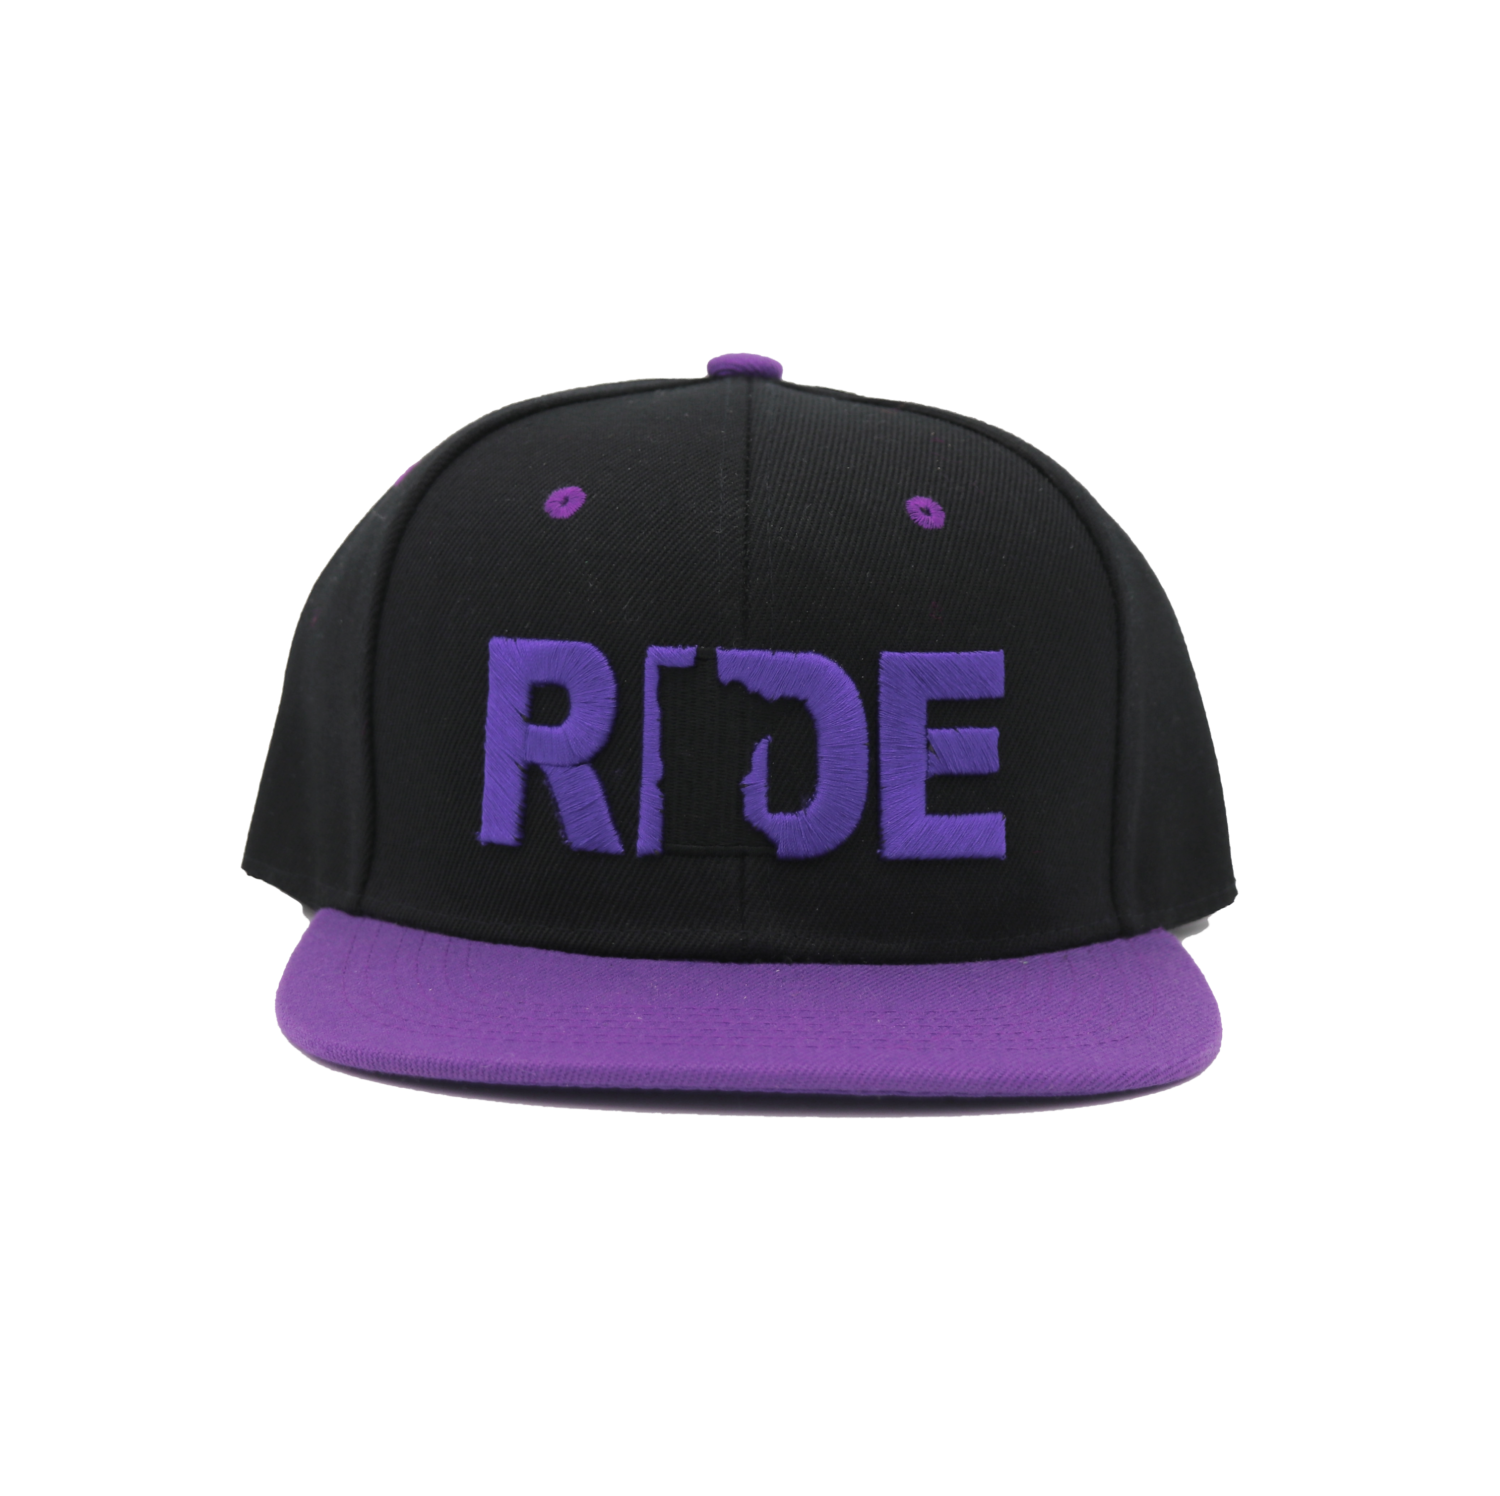 Ride Minnesota Classic Embroidered Snapback Flat Brim Hat Black/Purple x